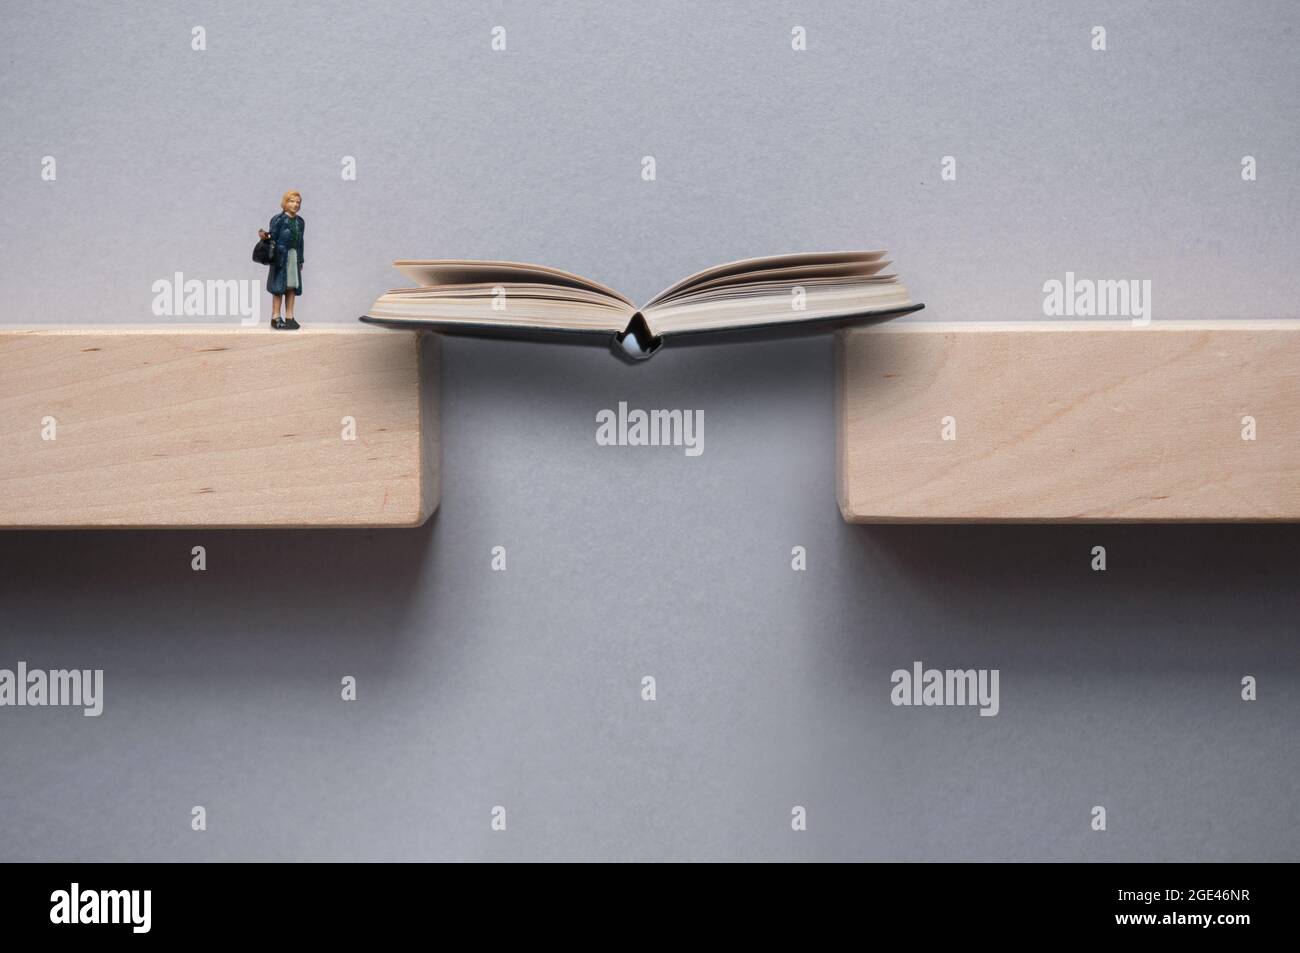 Open book bridging the gap between wooden blocks for female miniature figure to cross Stock Photo